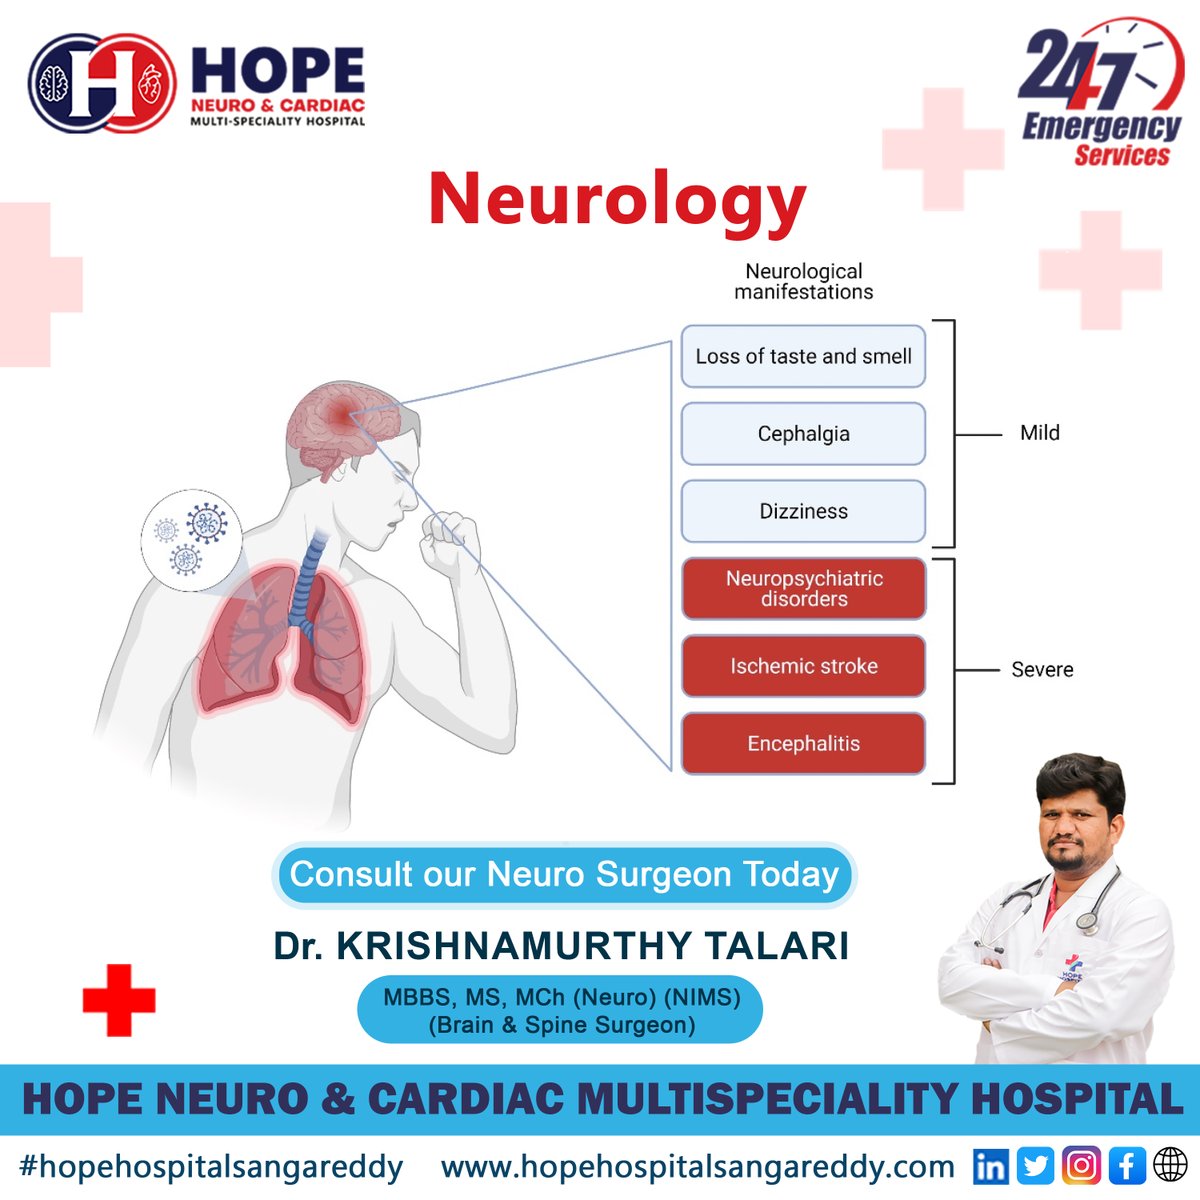 Neurology
Hope Neuro & Cardiac Multispecialty Hospital
Dr. Krishnamurthy Talari
Neuro & Spine Surgeon
Appointment : 7729955455
#memorylos #headache #weaknessoflims #Visualproblems #sleep #sleepdisturbance #BrainAwareness #headacherelief